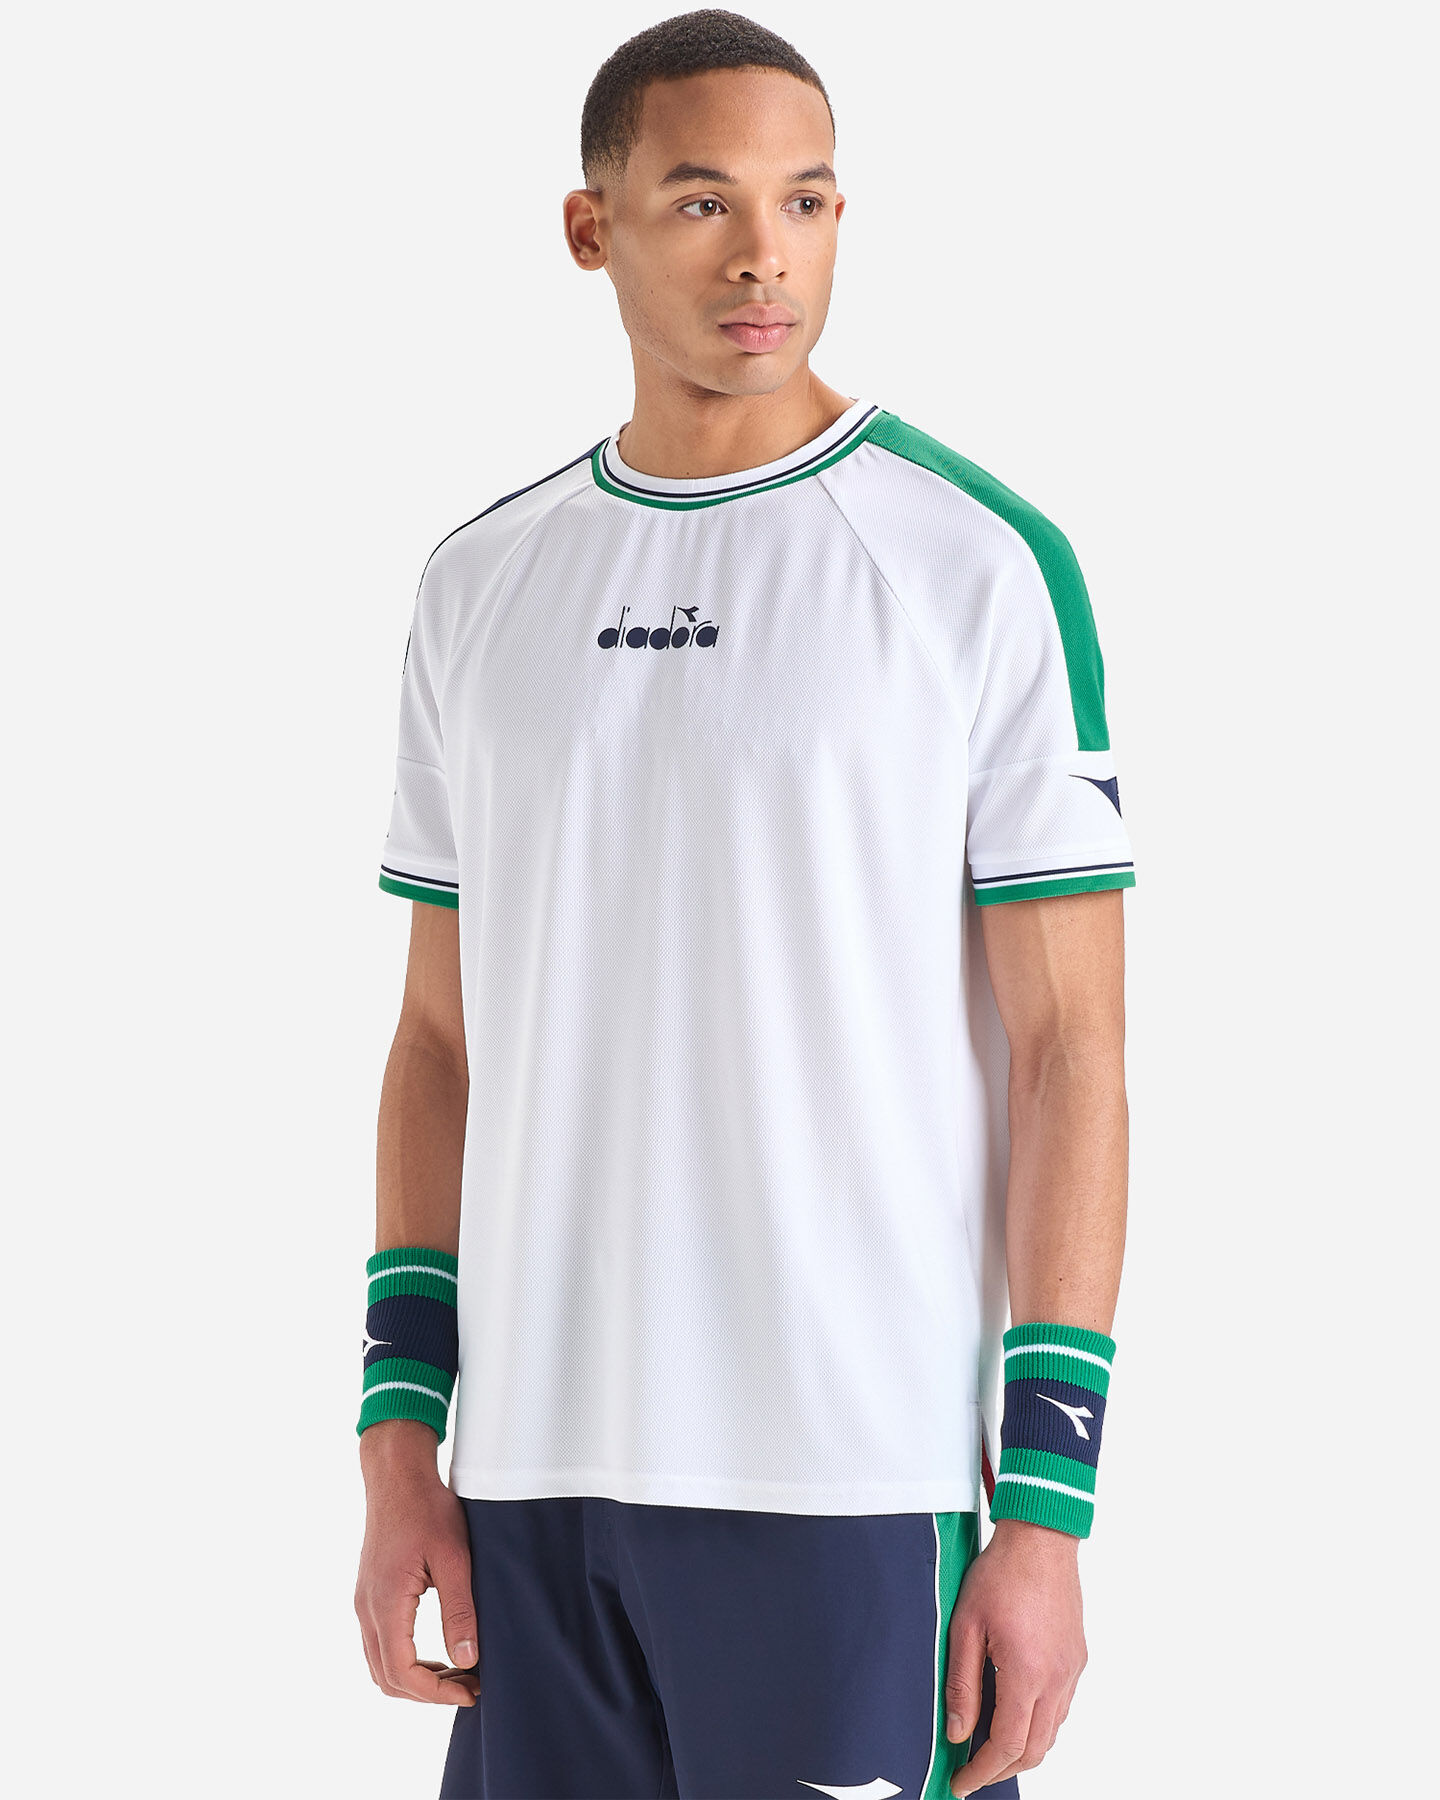  T-Shirt tennis DIADORA ICON M S5529666|20002|XL scatto 1